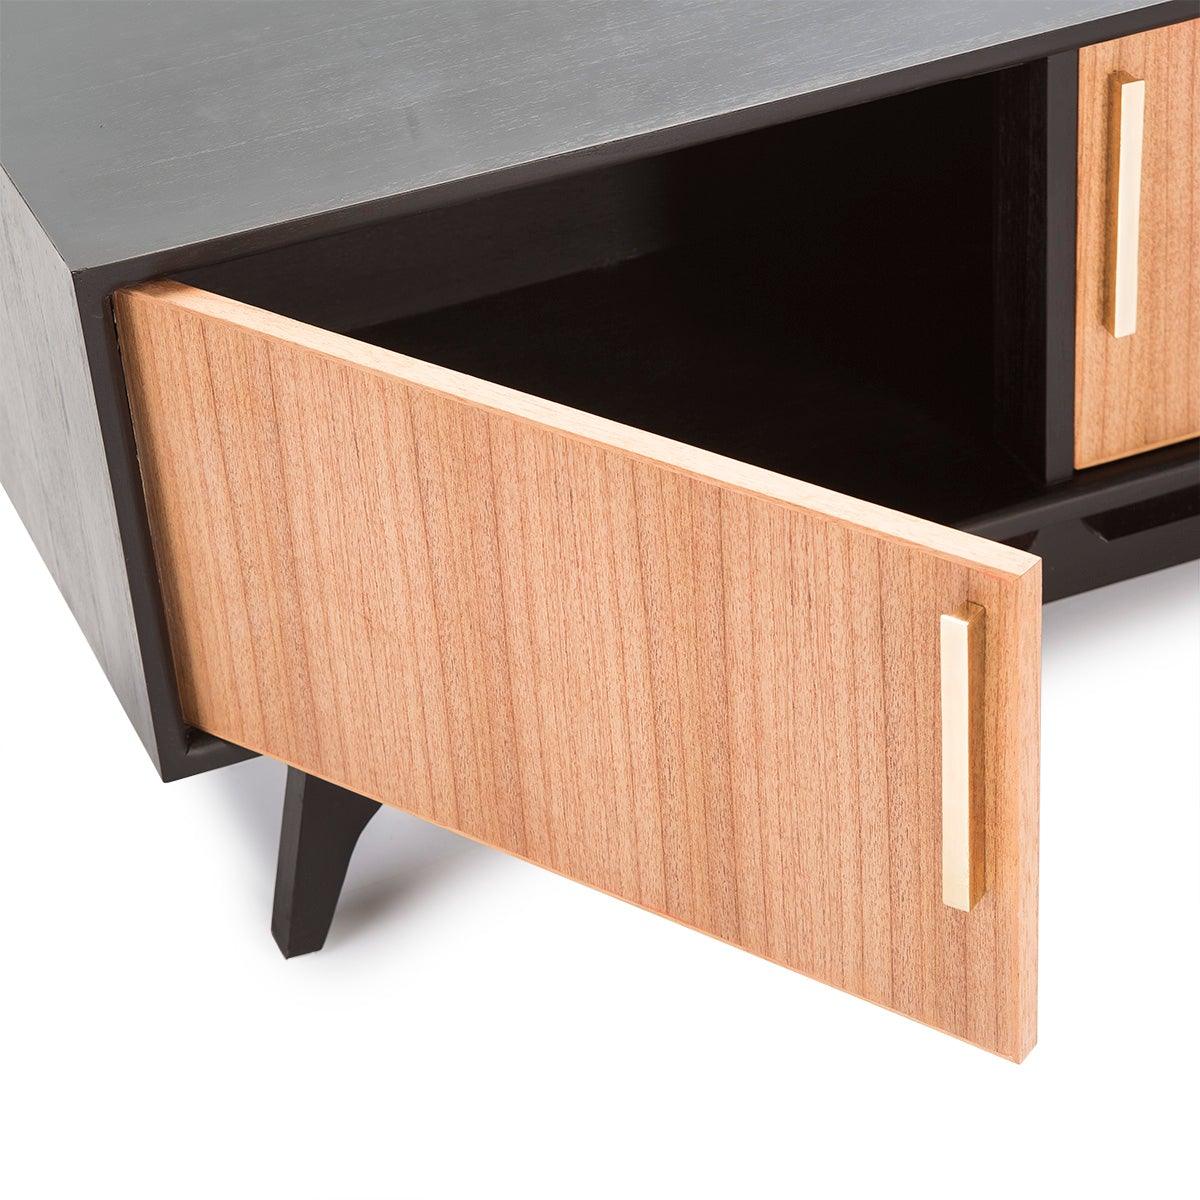 Wood TV Cabinet W/Gold Handles